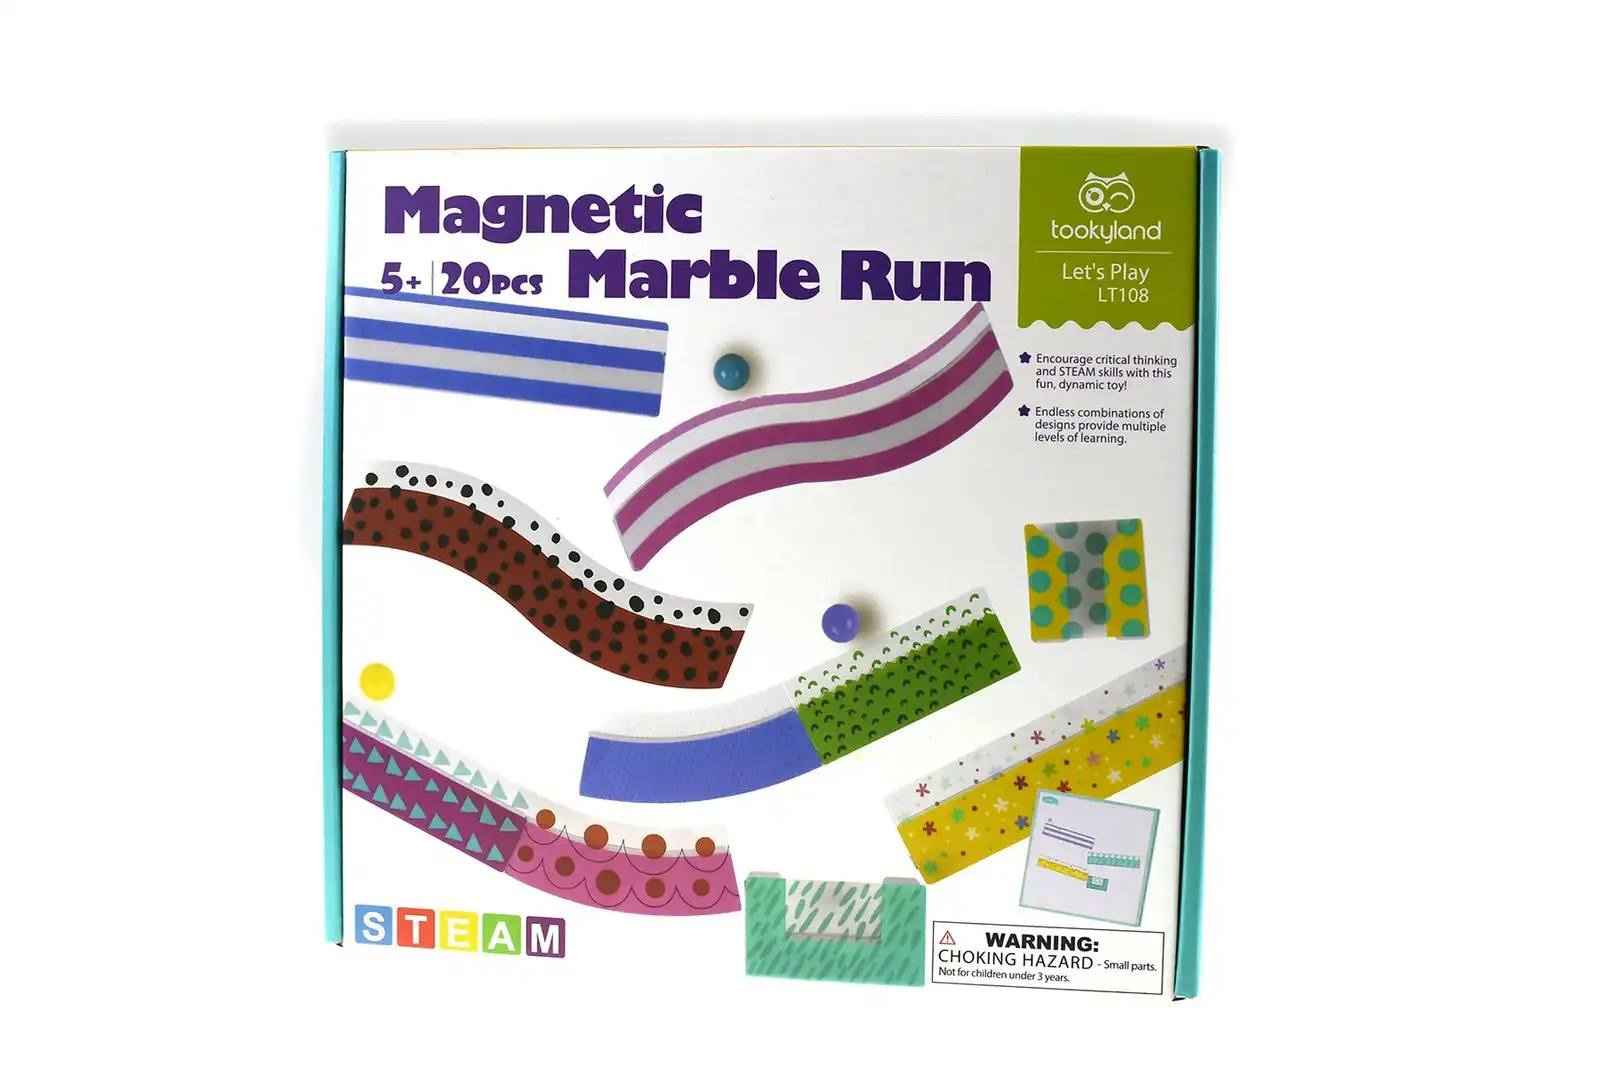 Tookyland Magnetic Creative/Interactive Kids/Children's Marble Race/Run 5+